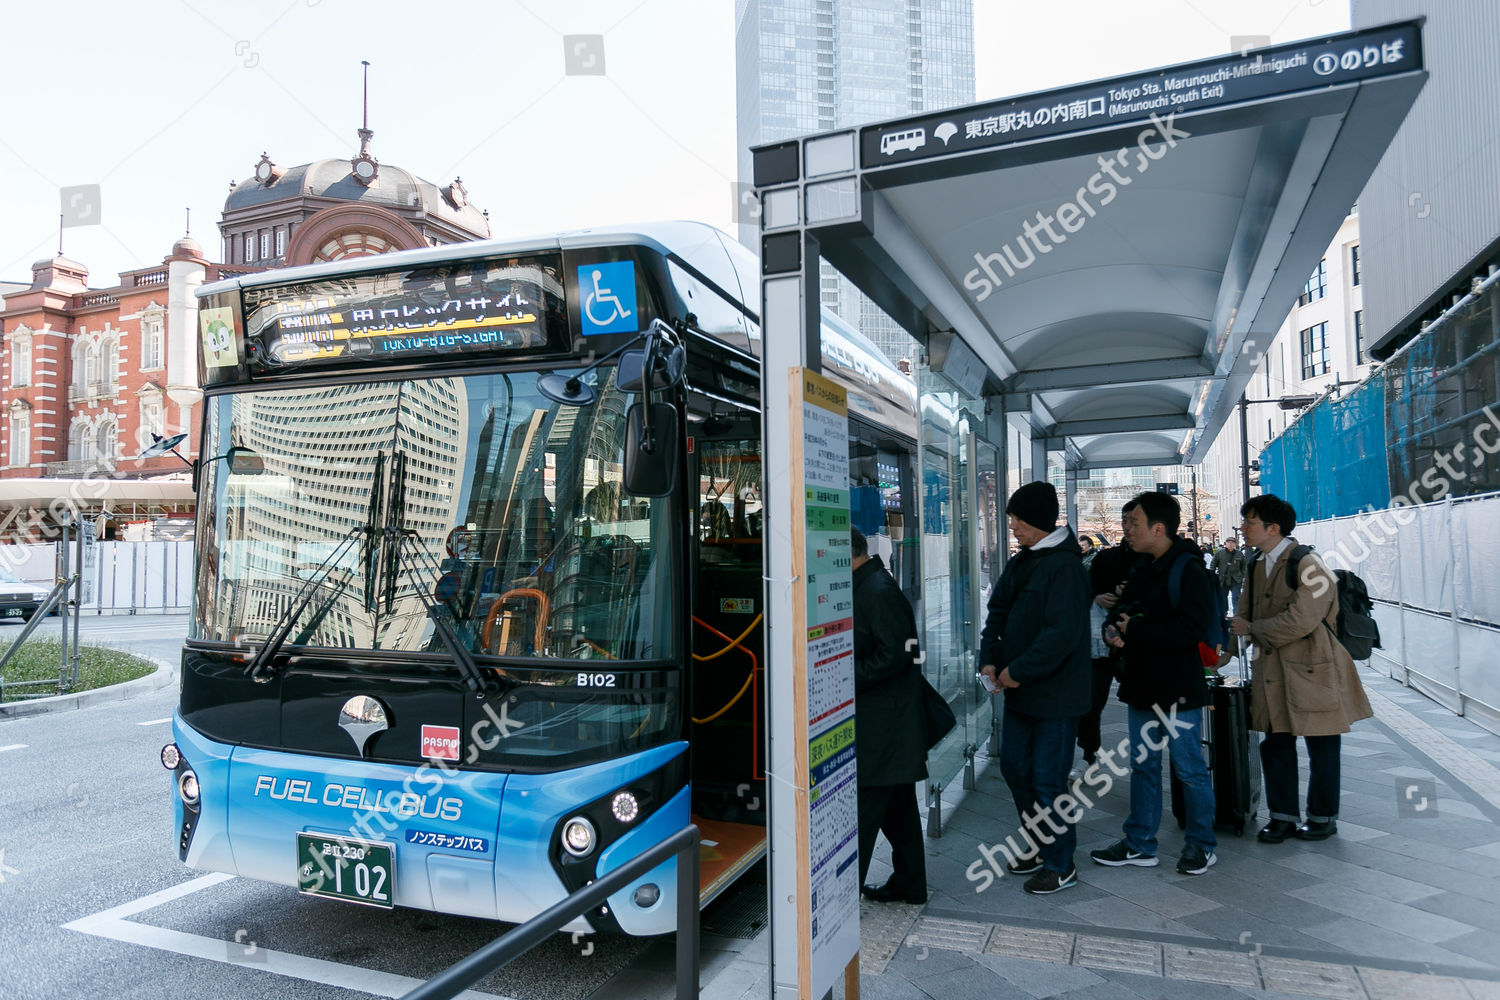 toyota-fuel-cell-buses-tokyo-japan-shutterstock-editorial-8551479k.jpg